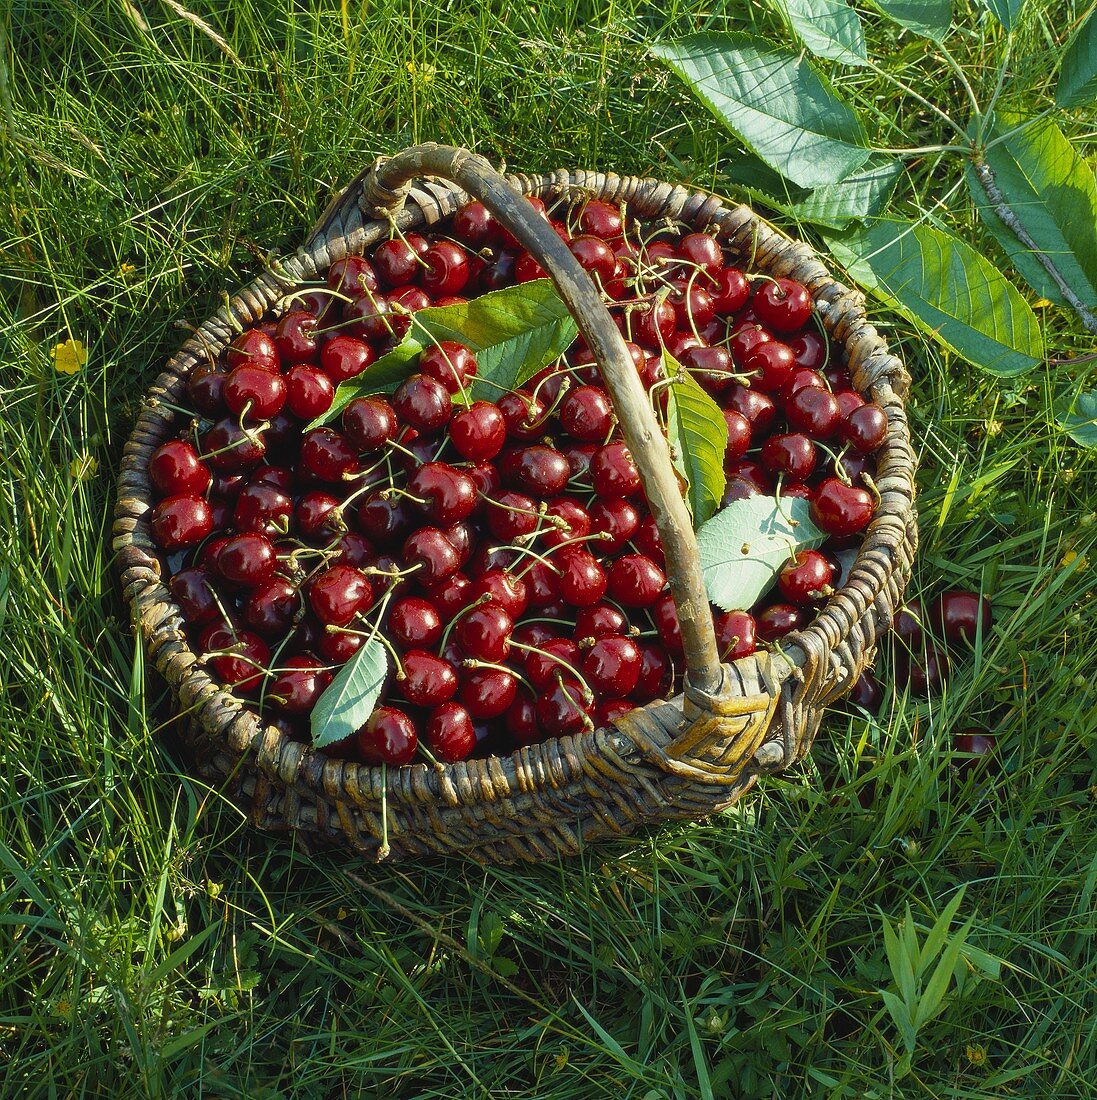 Basket with Freshly Picked Cherries